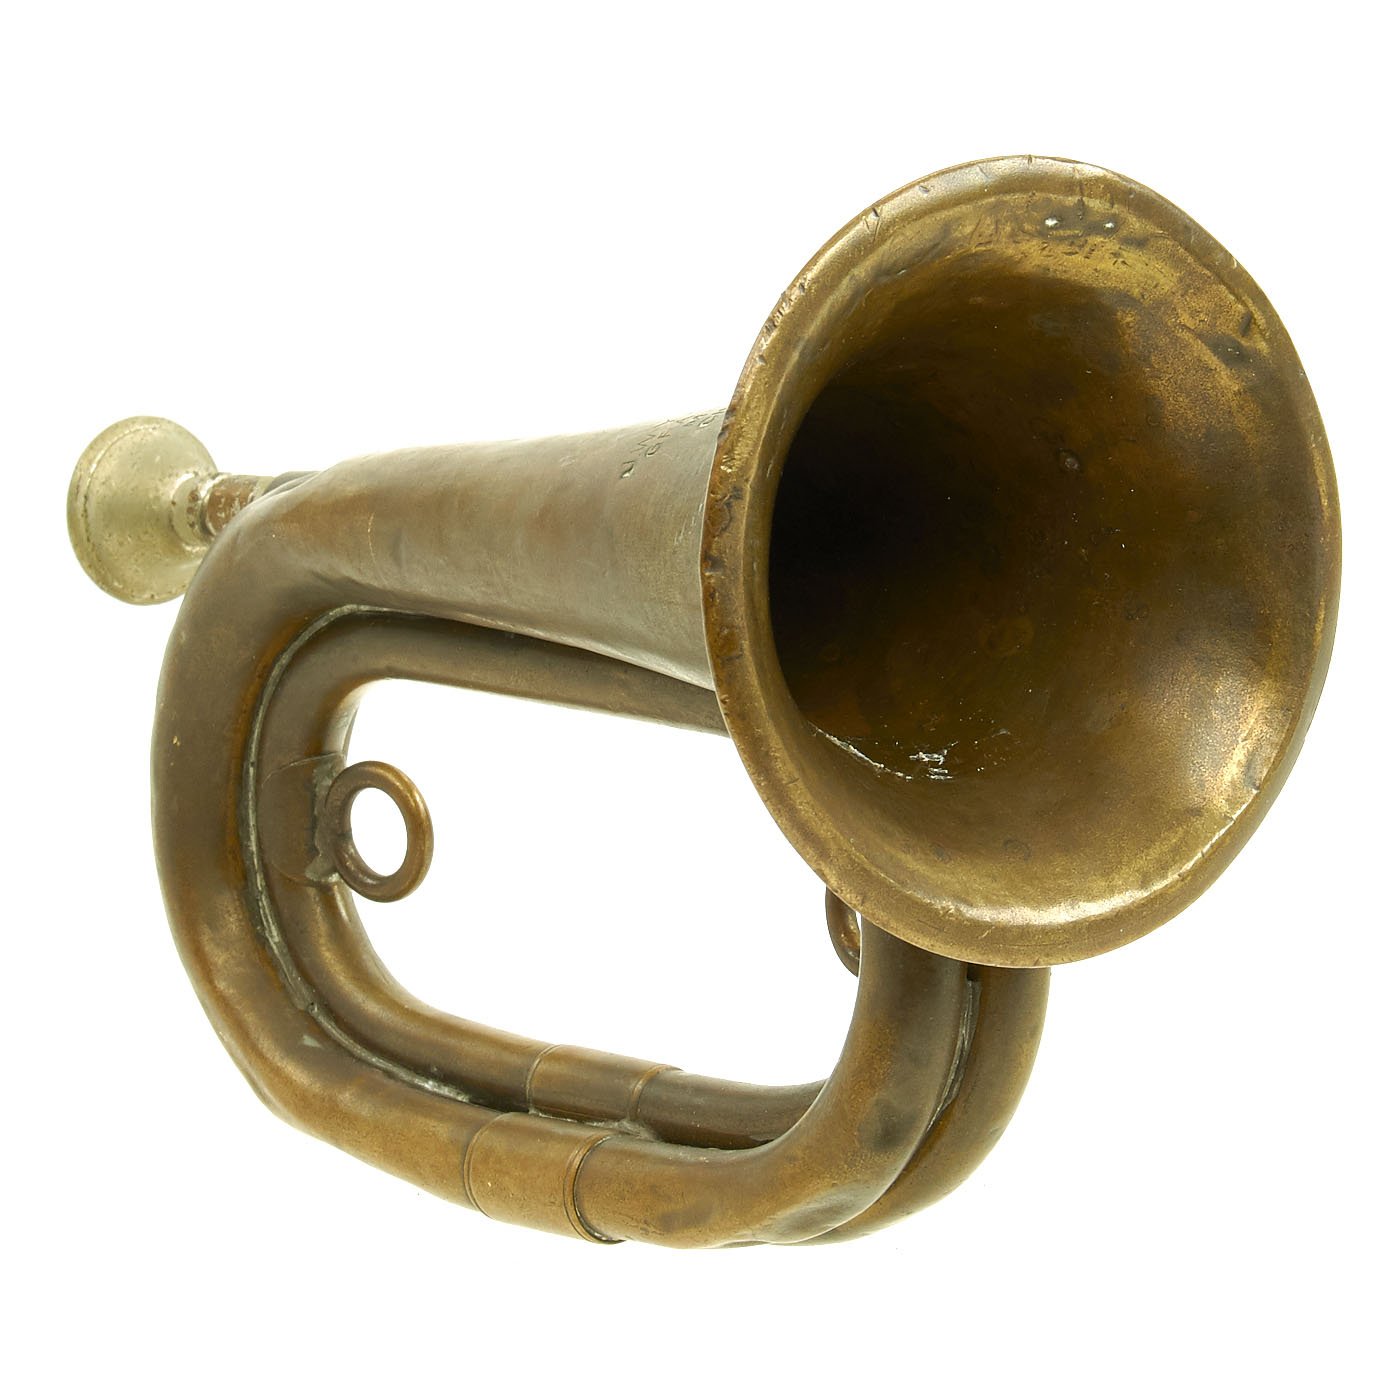 Bugle, History, Types & Uses